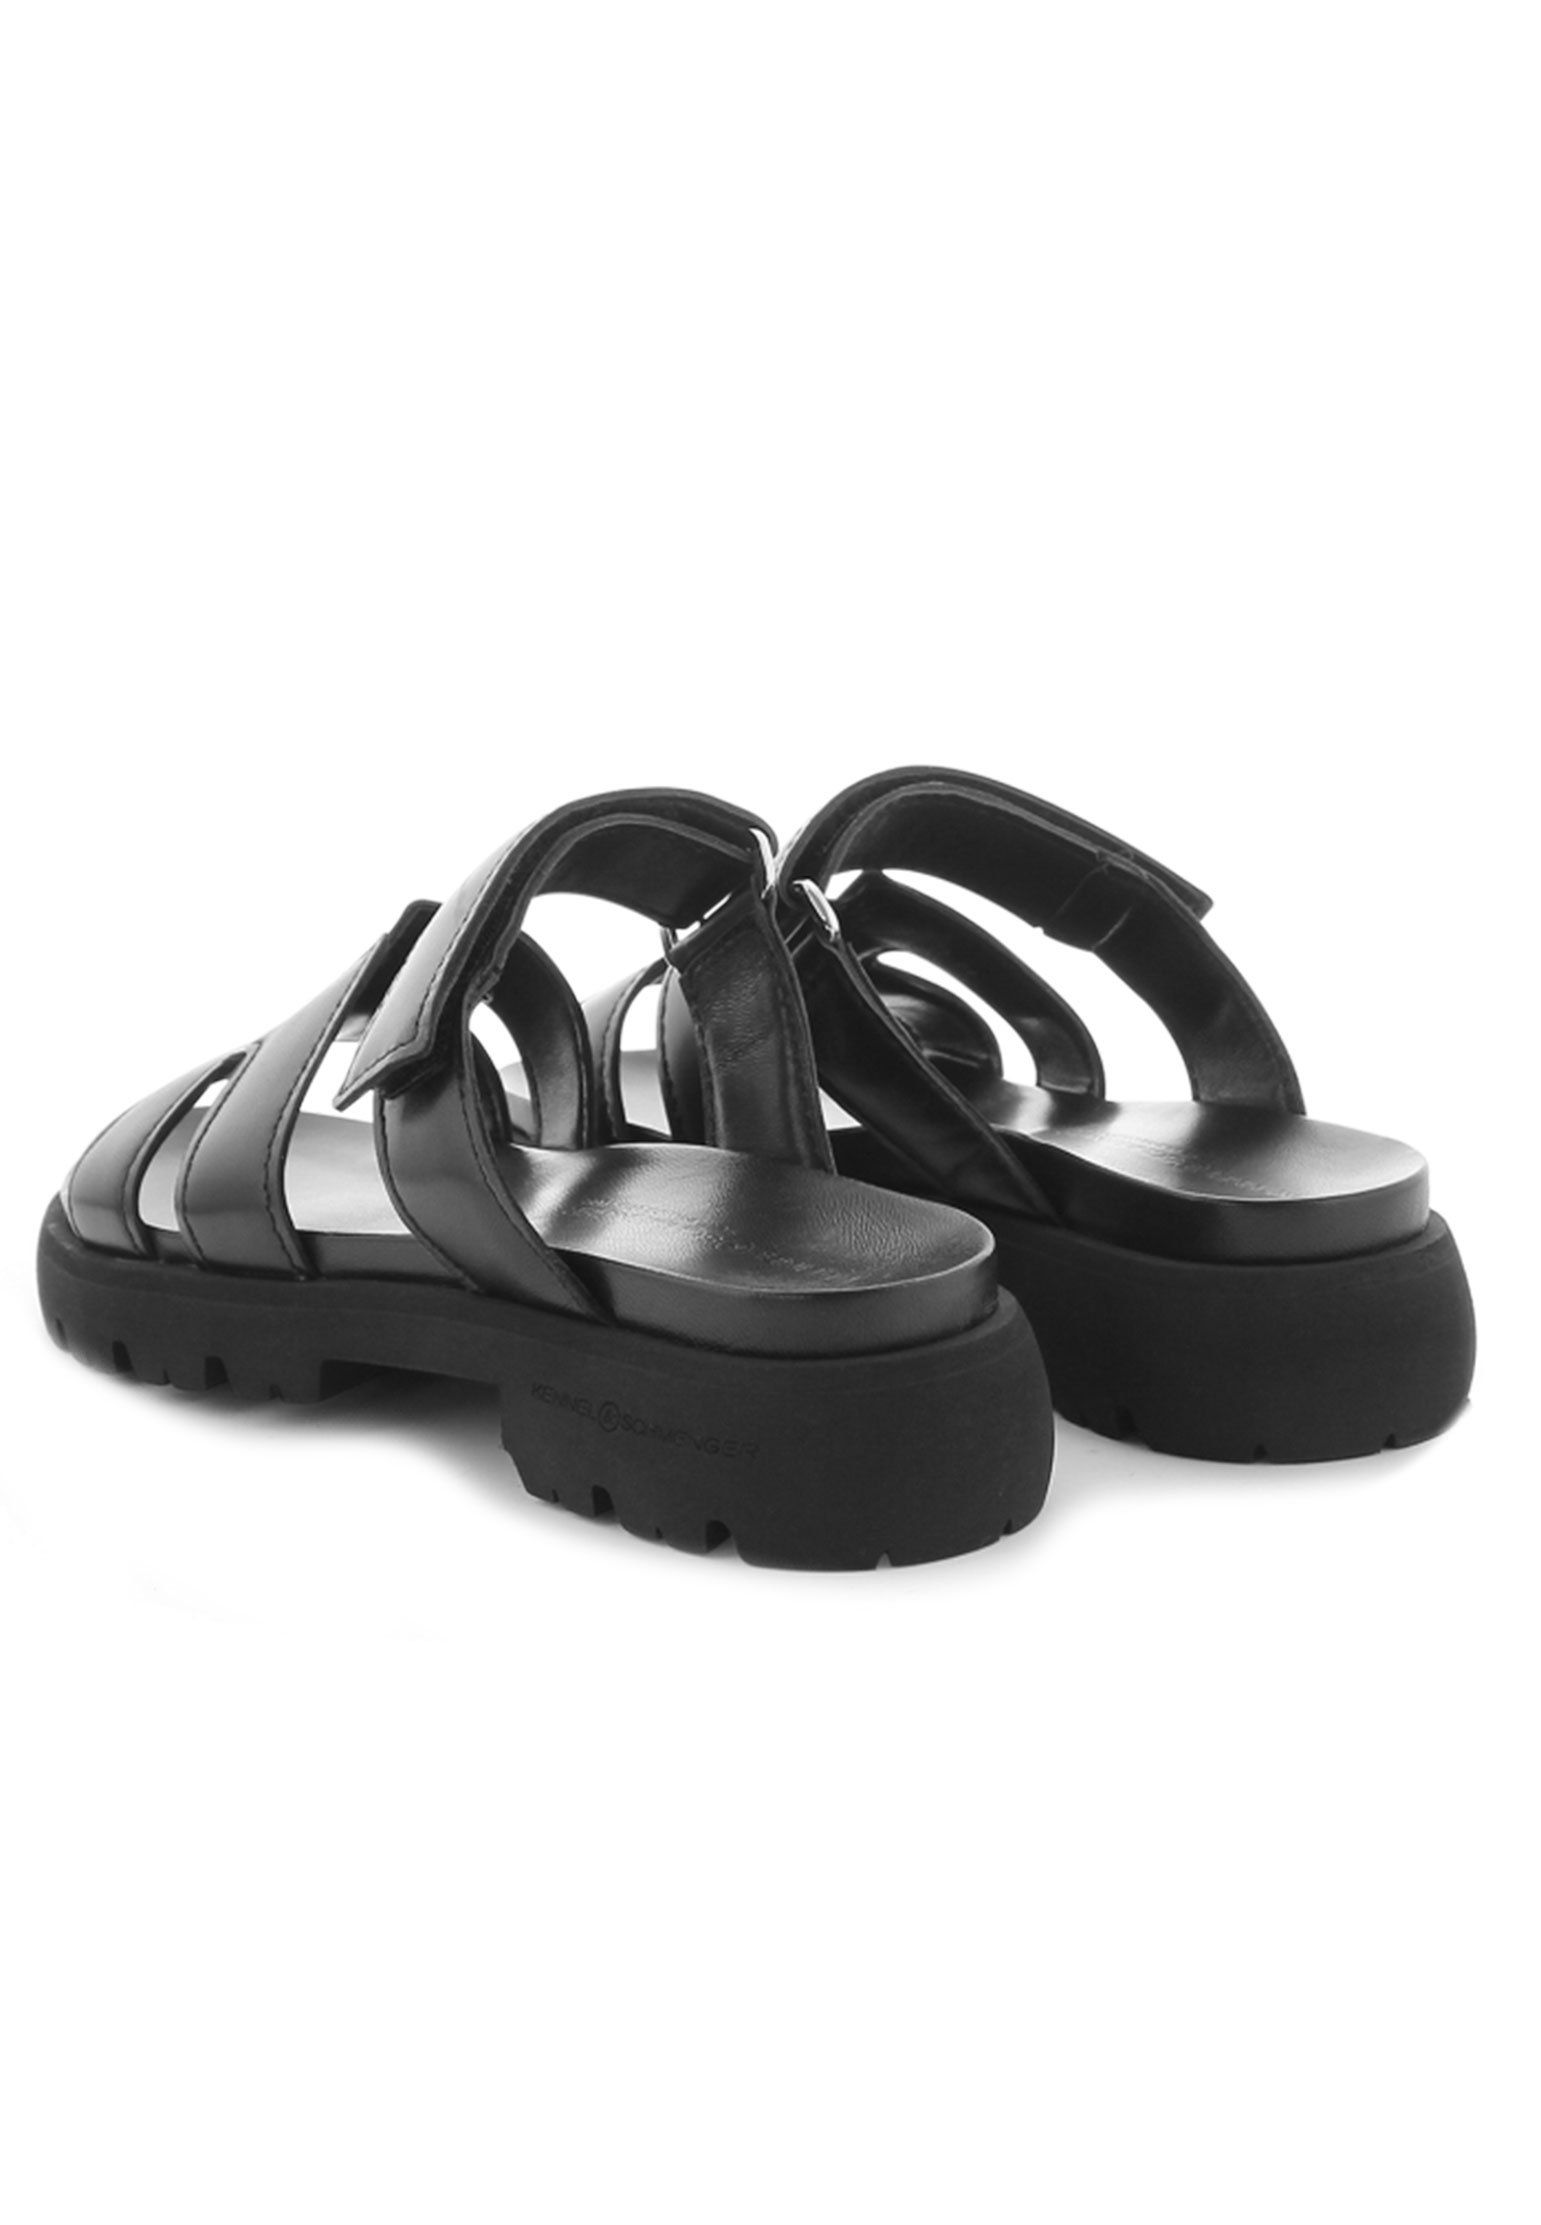 Flat shoes KENNEL&SCHMENGER Color: black (Code: 4162) in online store Allure